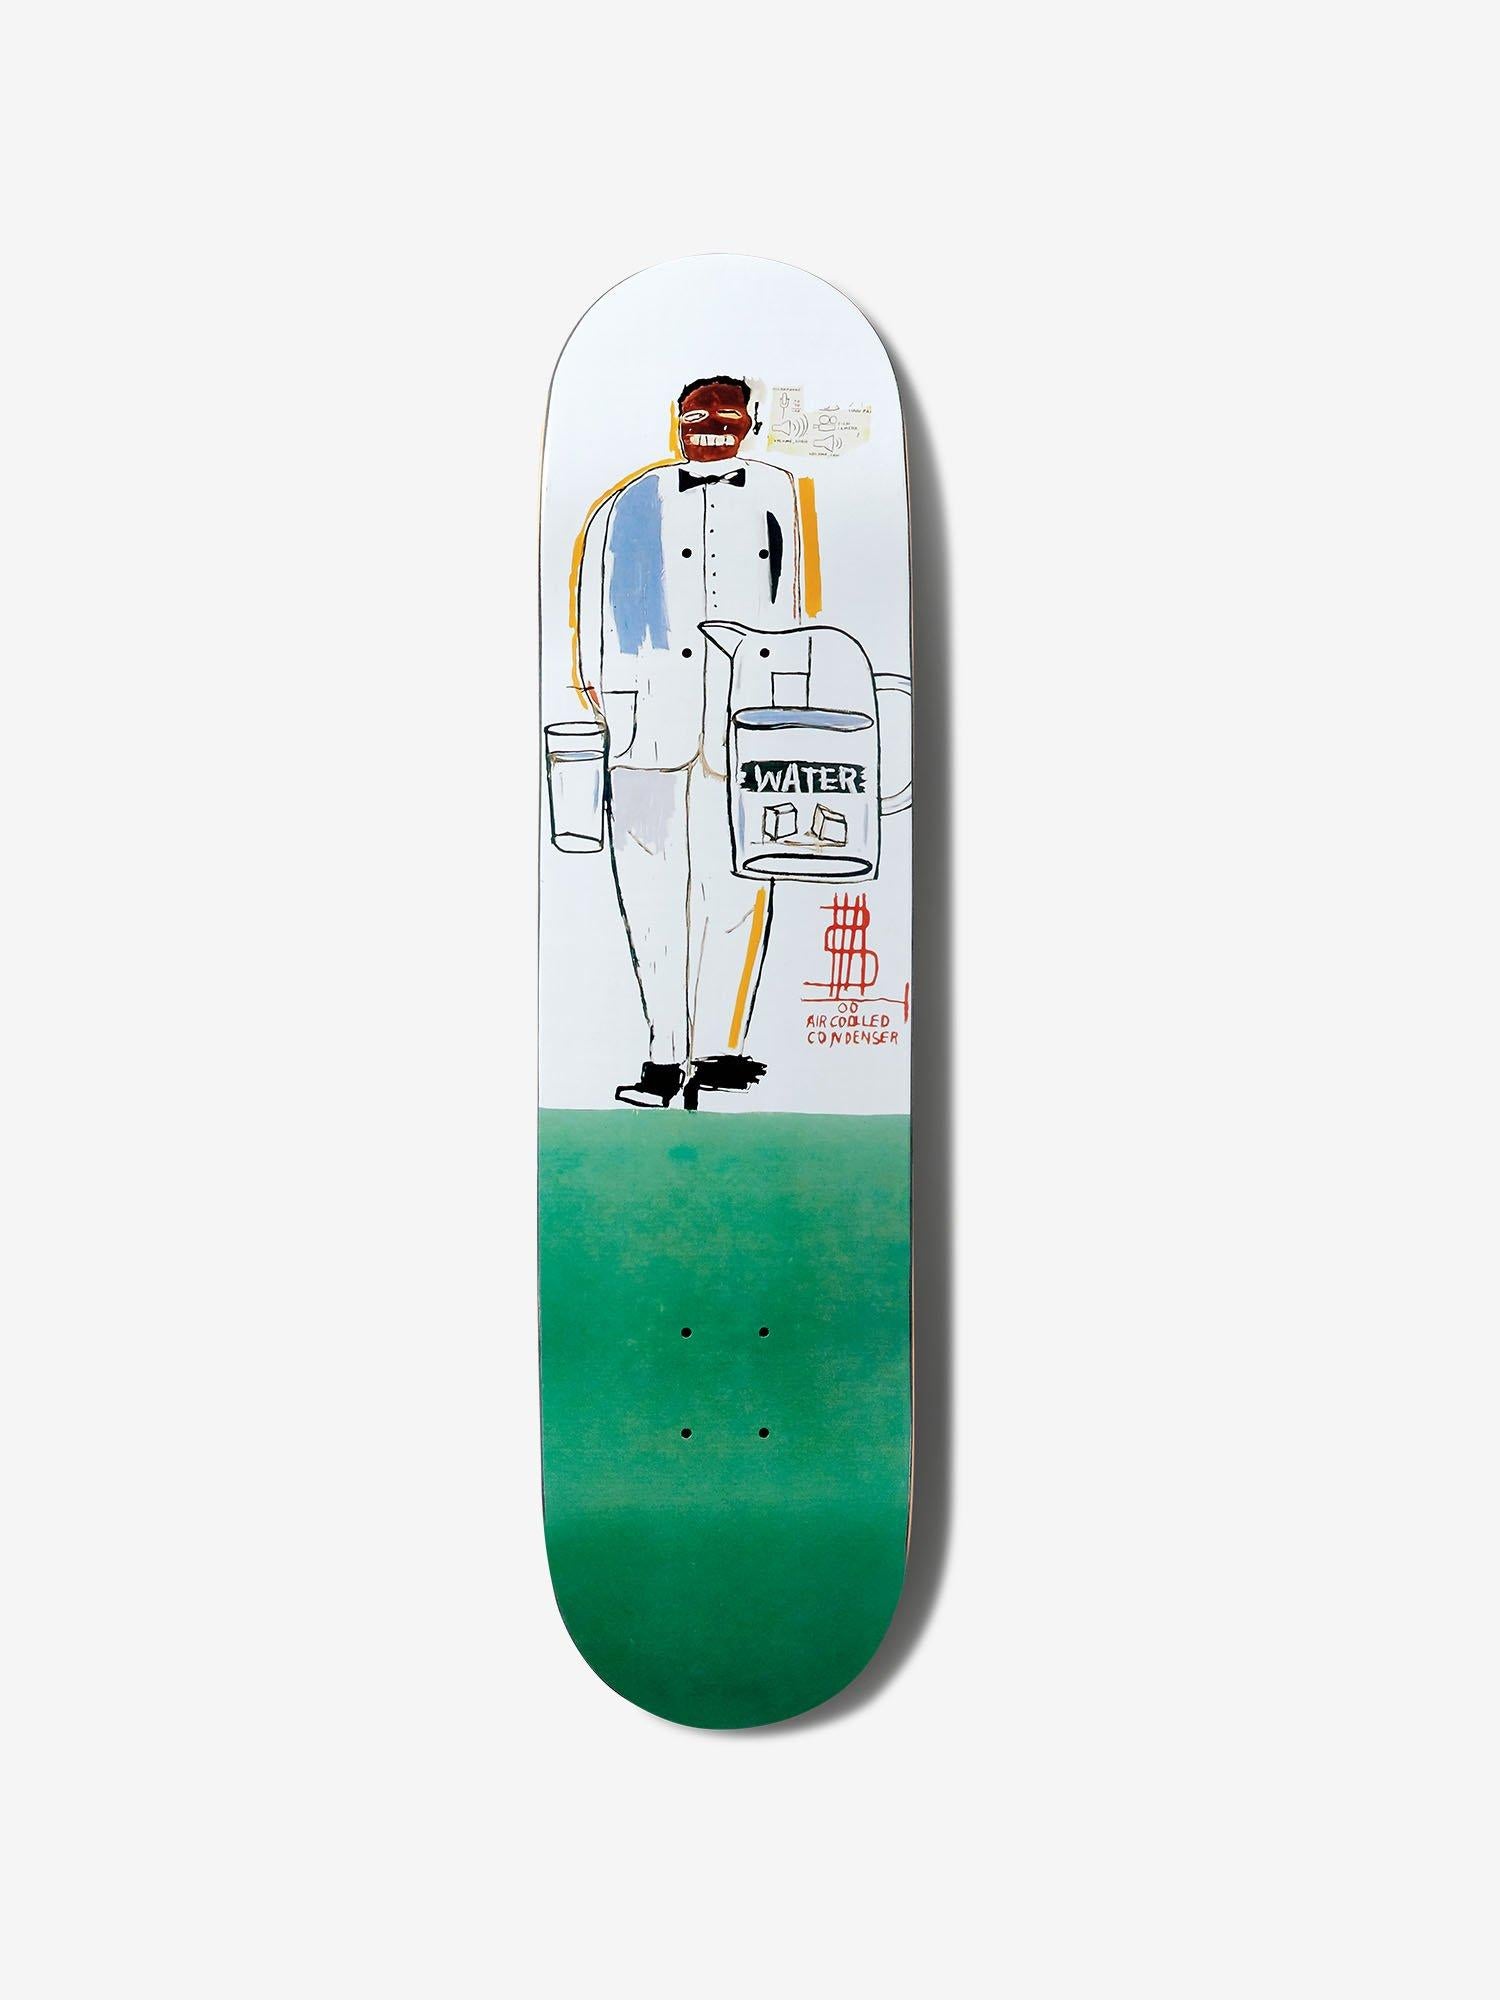 Basquiat Skateboard Deck (Basquiat skate deck)  - Pop Art Sculpture by Jean-Michel Basquiat